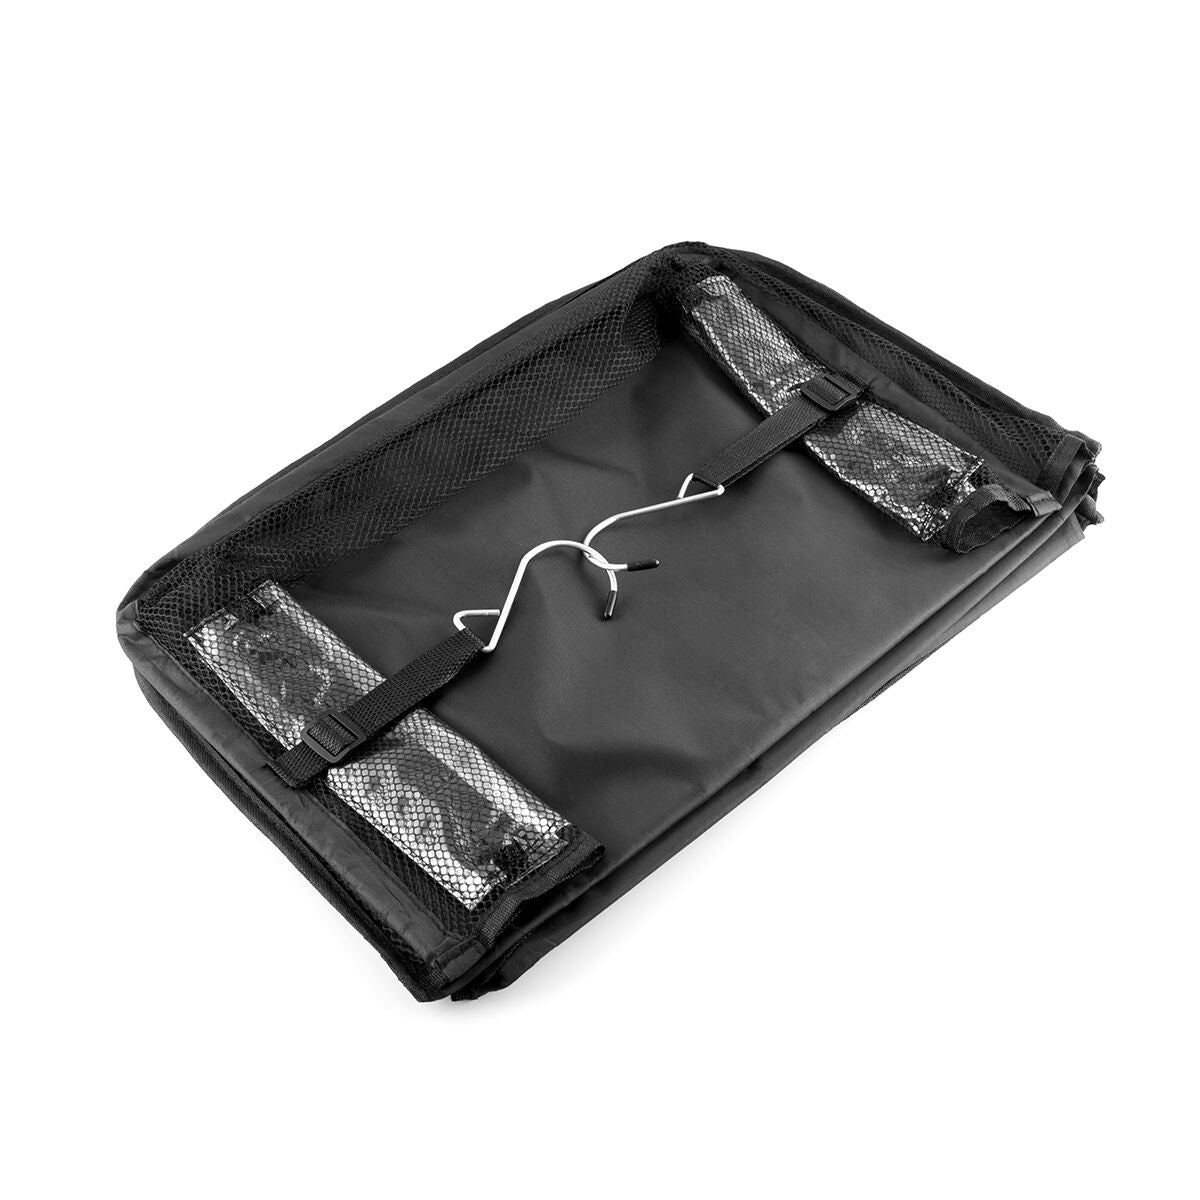 Kaufe Faltbares, tragbares Organisationsregal für Gepäck Sleekbag InnovaGoods bei AWK Flagship um € 30.00